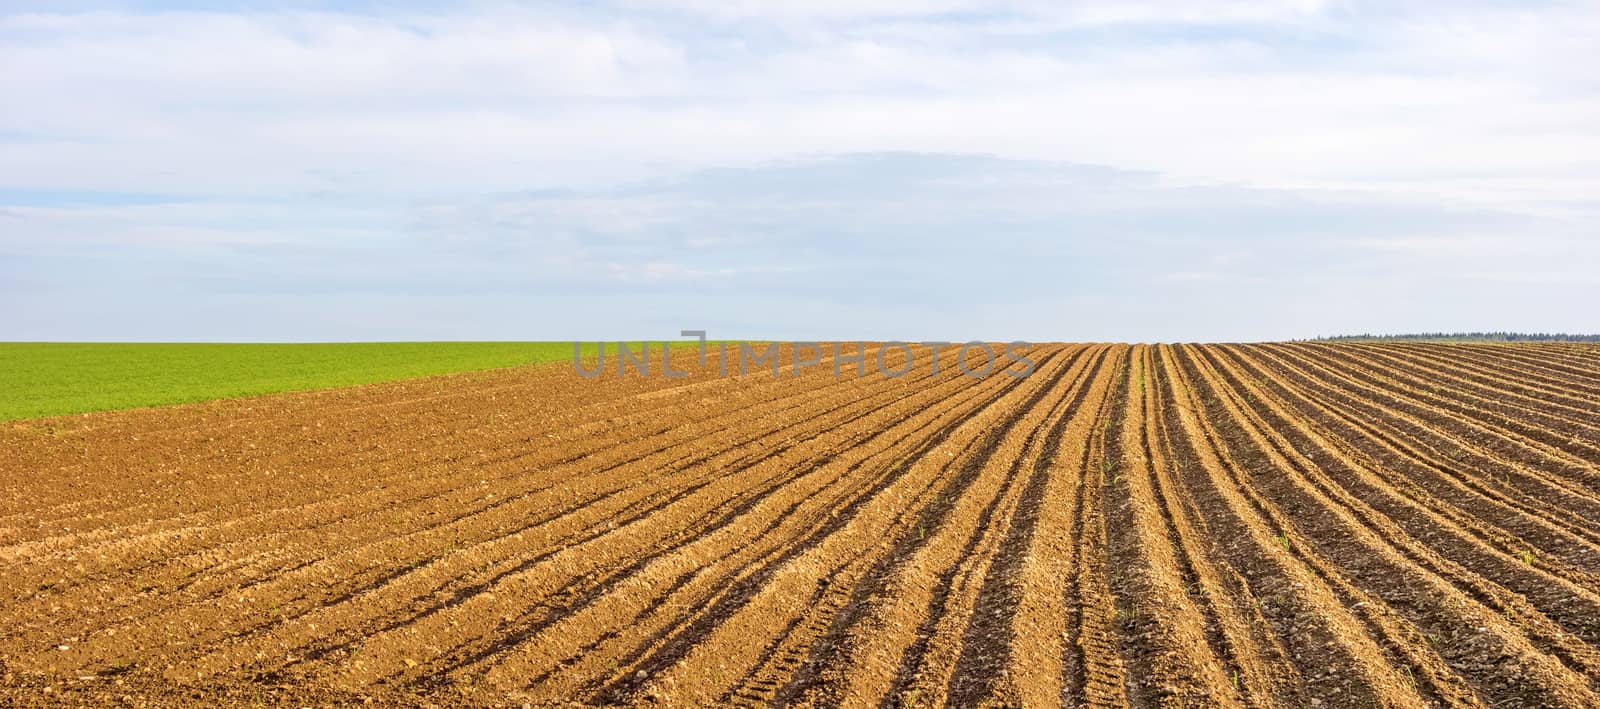 Farmland panorama - brown field, blue sky, rural landscape